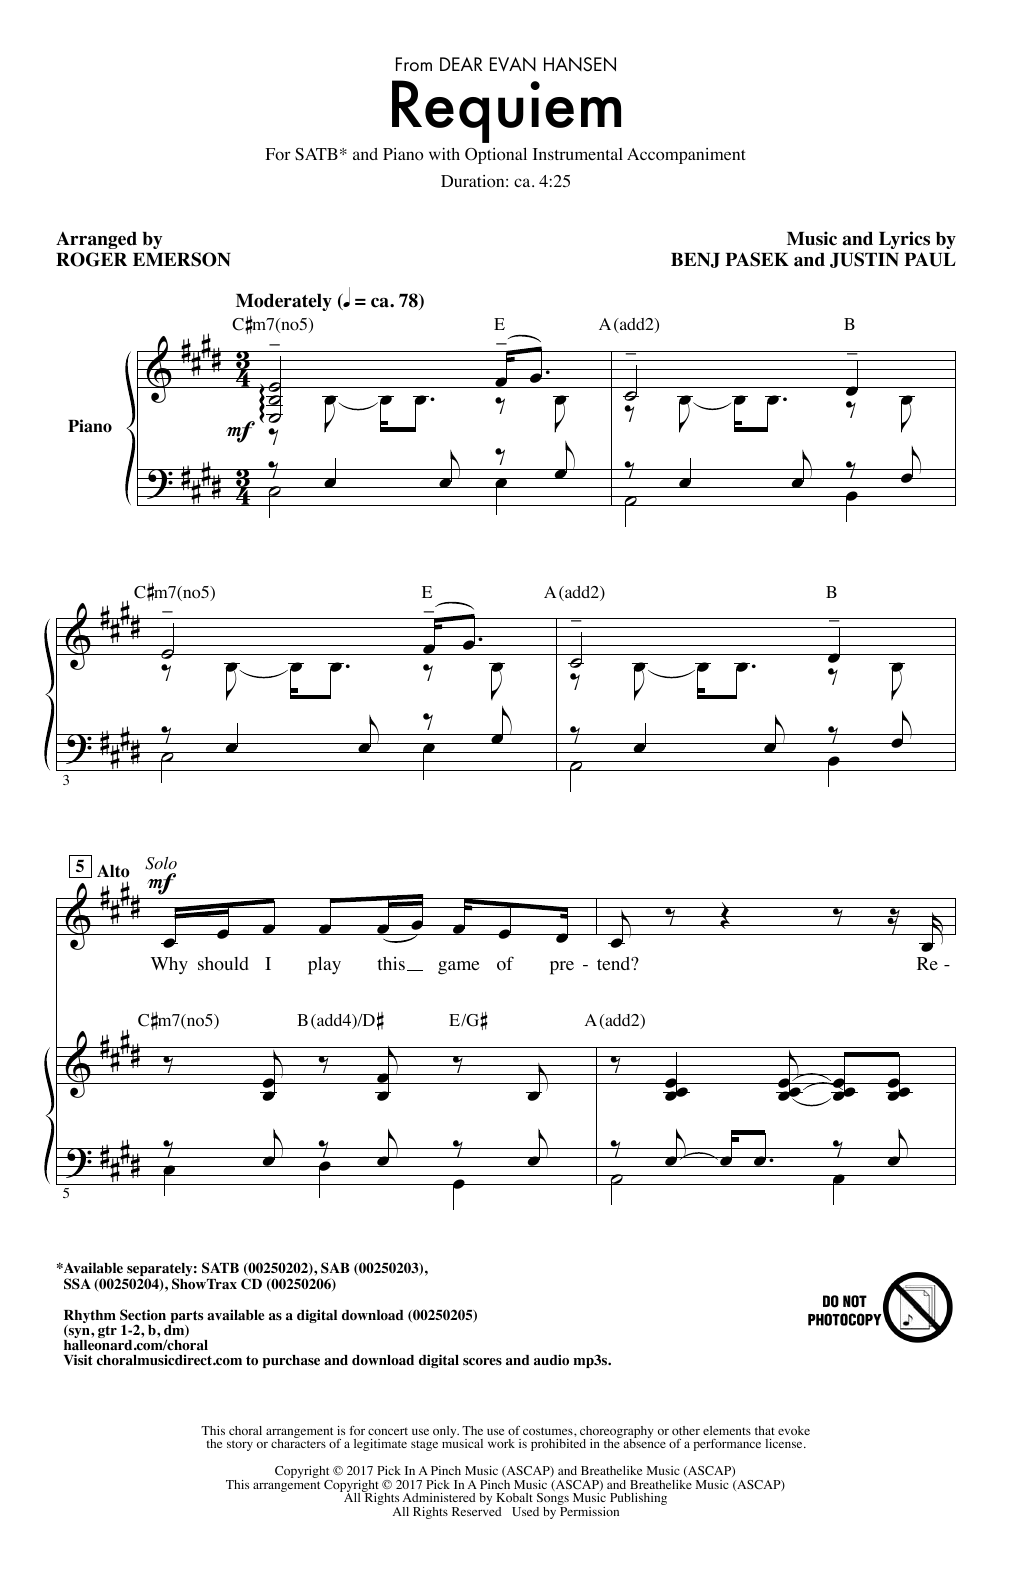 Pasek & Paul Requiem (from Dear Evan Hansen) (arr. Roger Emerson) sheet music notes and chords arranged for SAB Choir